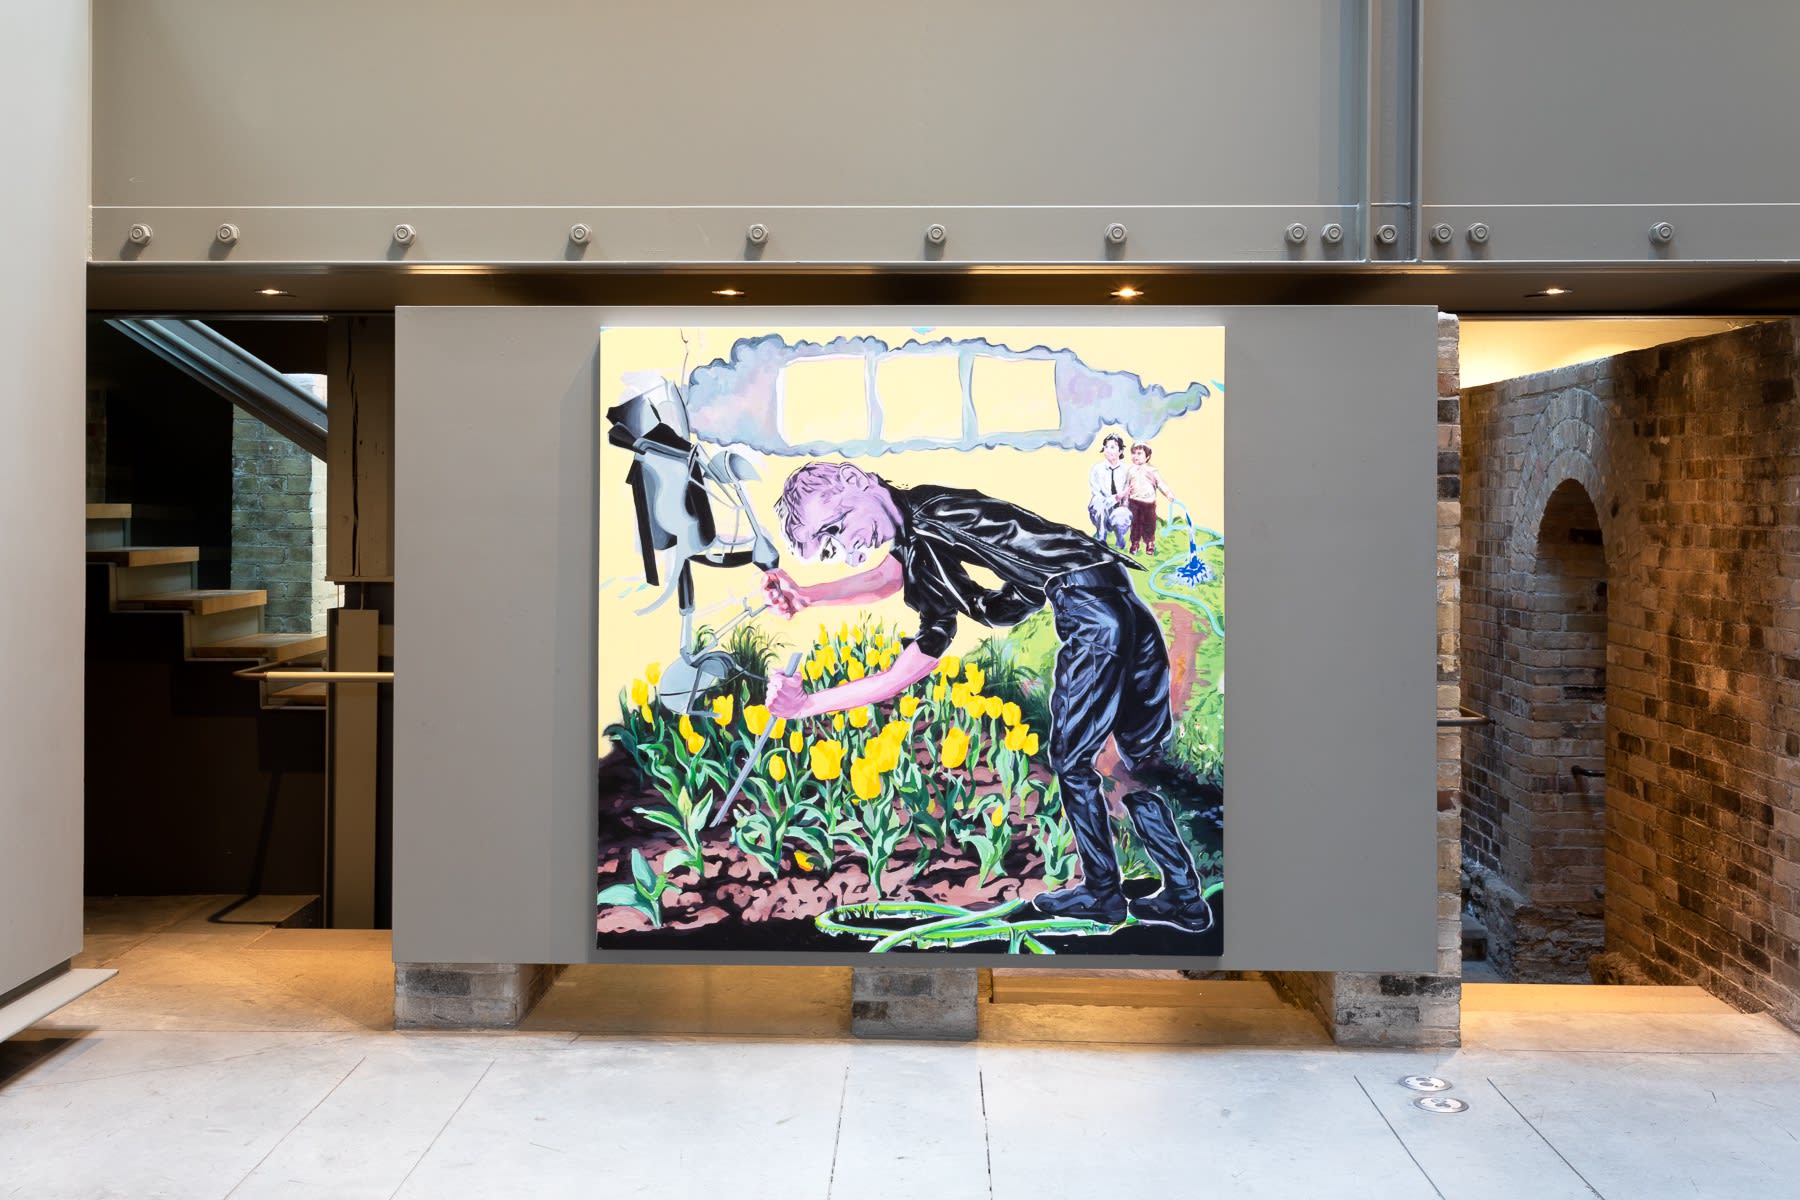 Rafael Yaluff, The Gardener, 2019, oil and acrylic on canvas, 67 x 67 in.